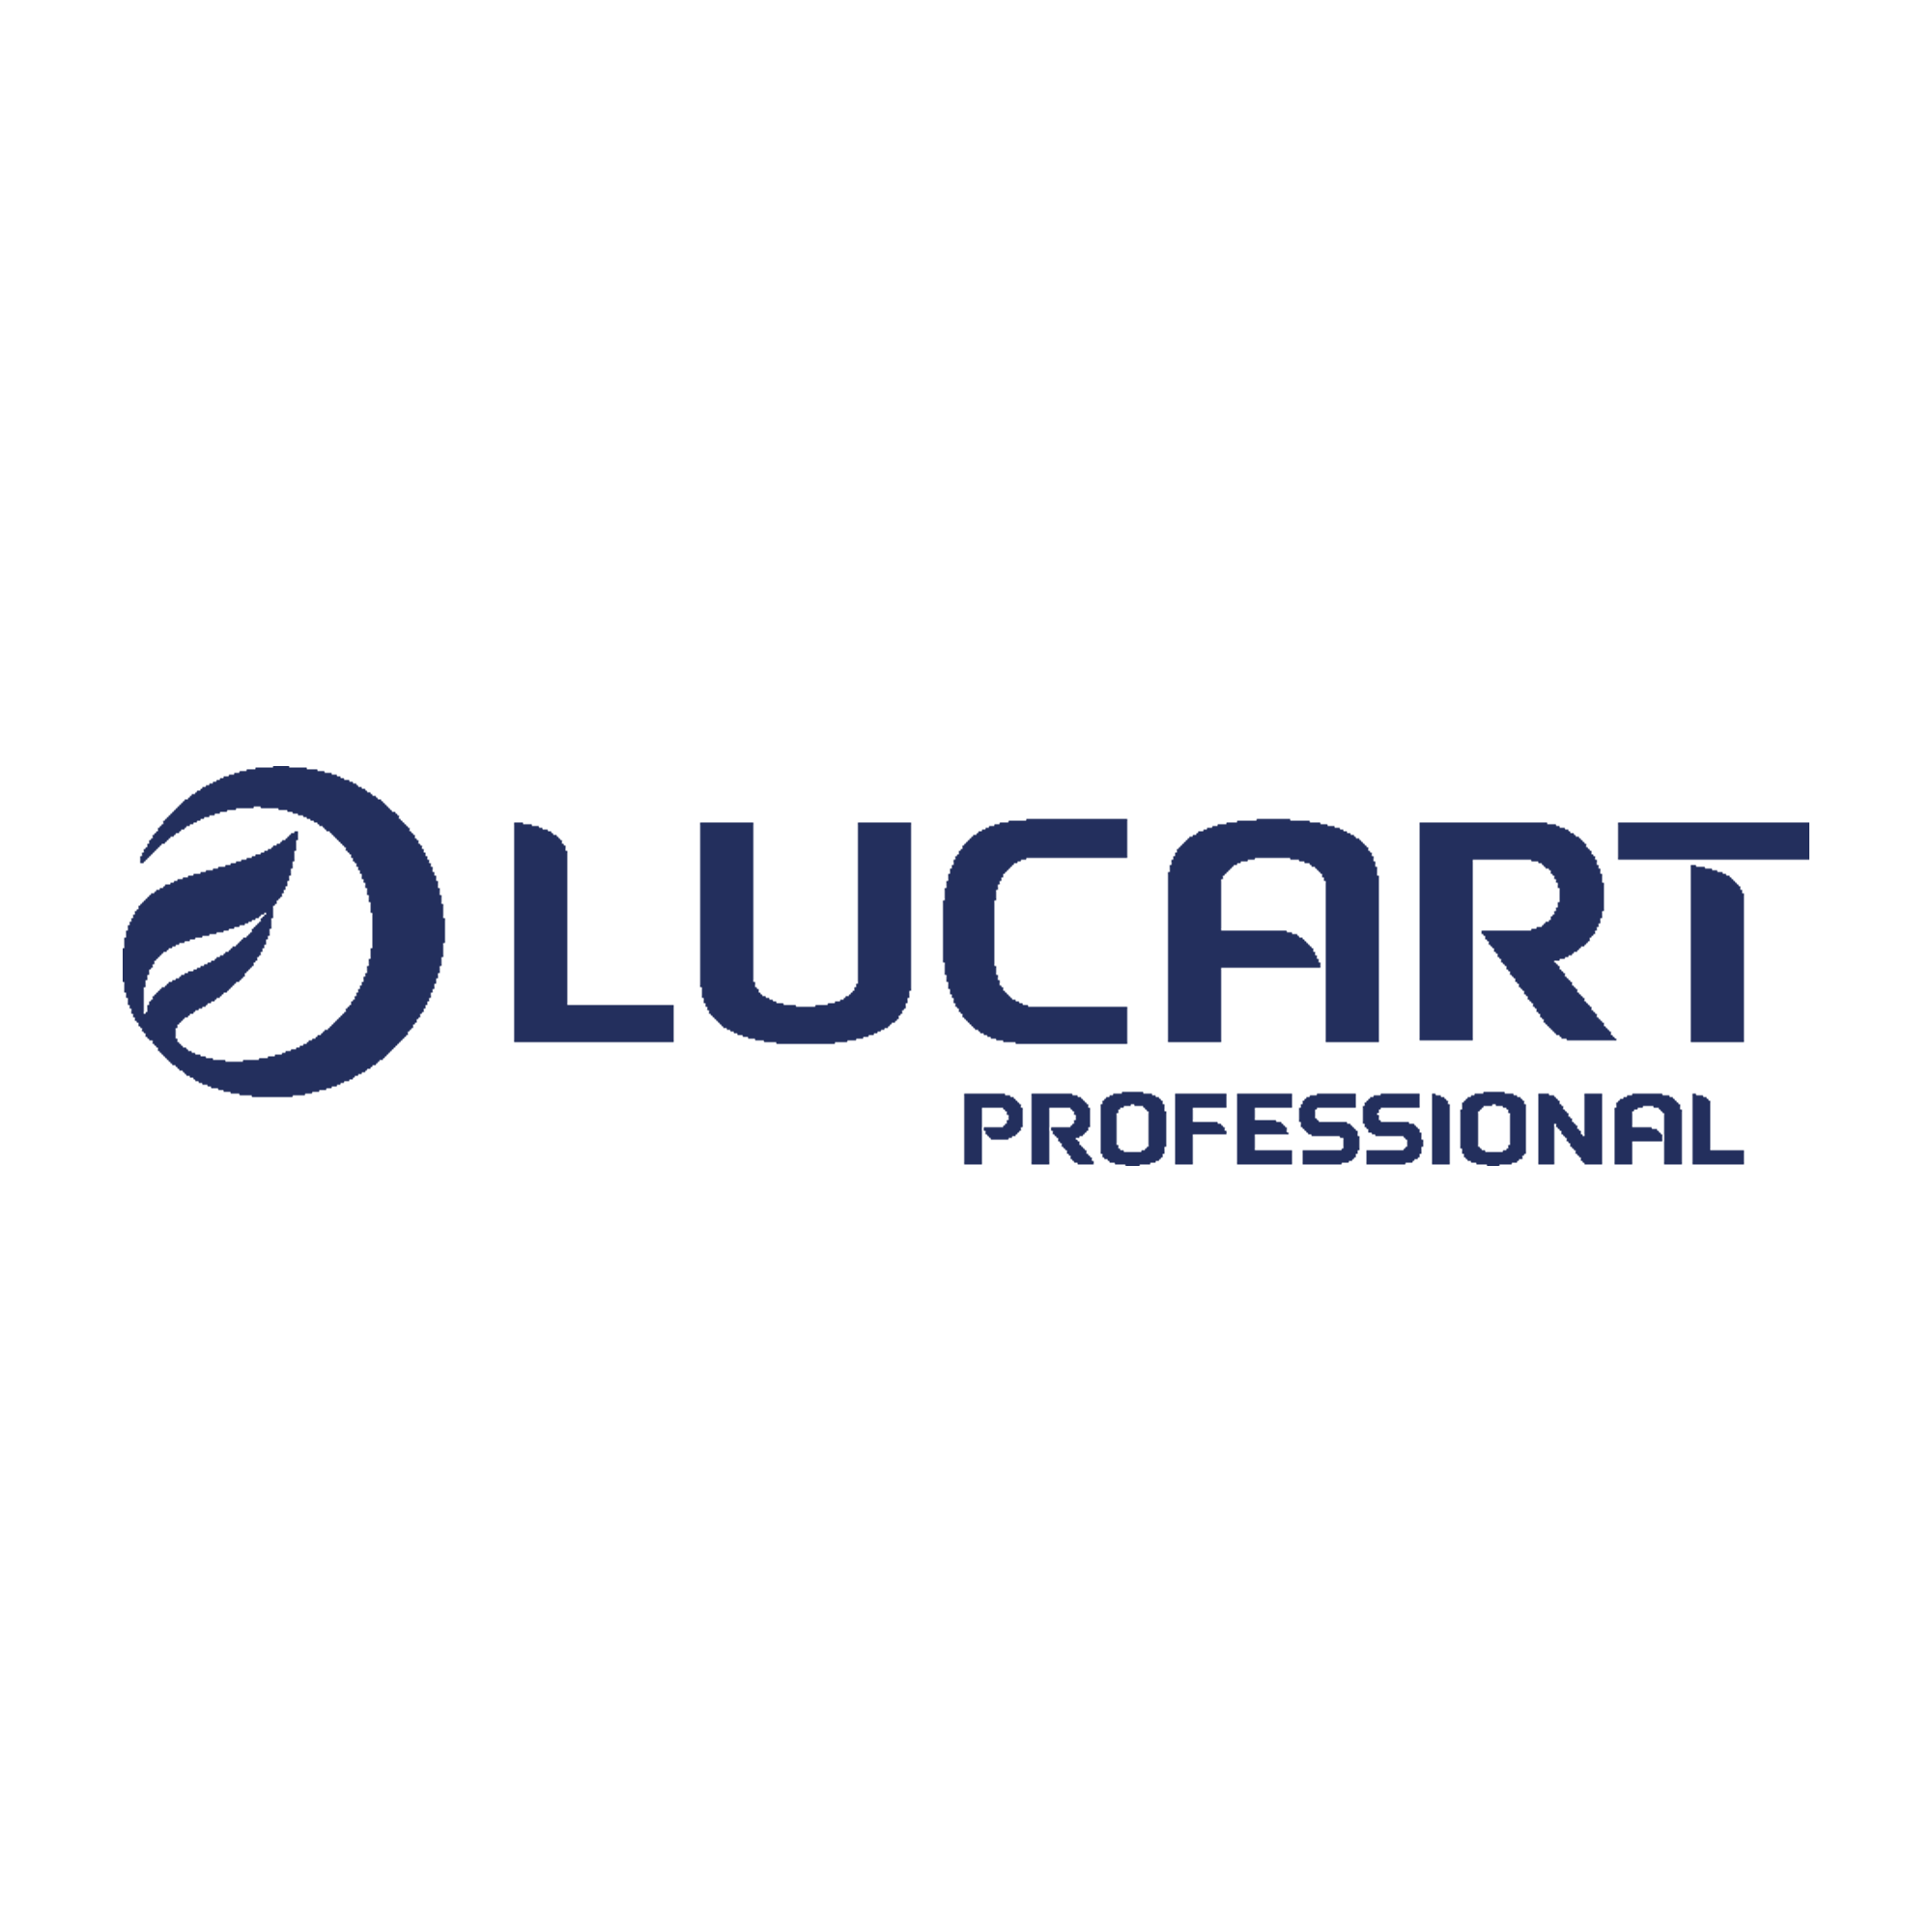 Lucart EcoNatural 210 I hajtogatott toalettpapír, 40 csomag/karton